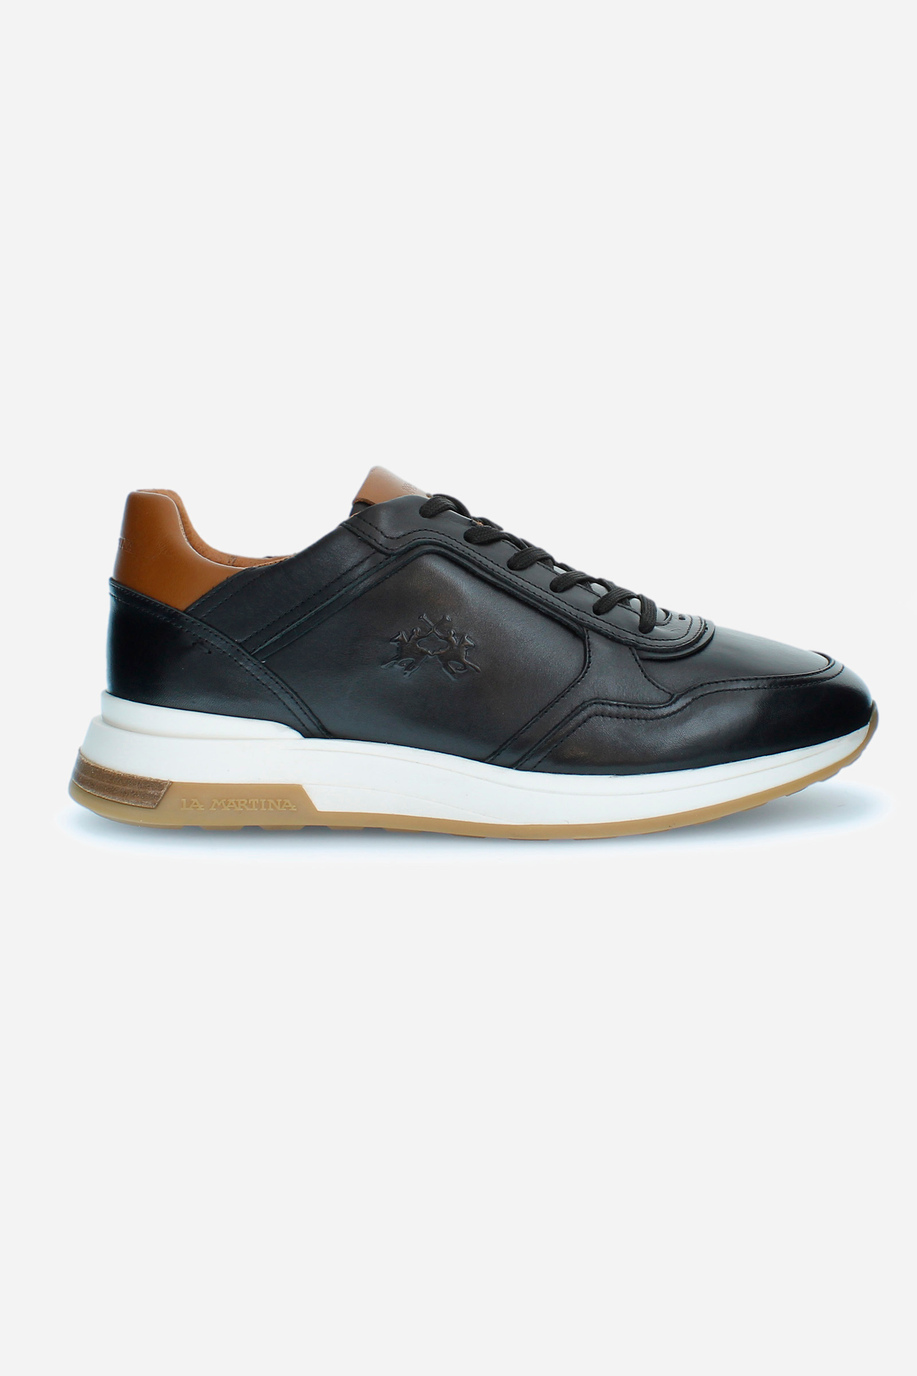 Herren-Sneaker mit erhöhter Sohle - Schuhe | La Martina - Official Online Shop